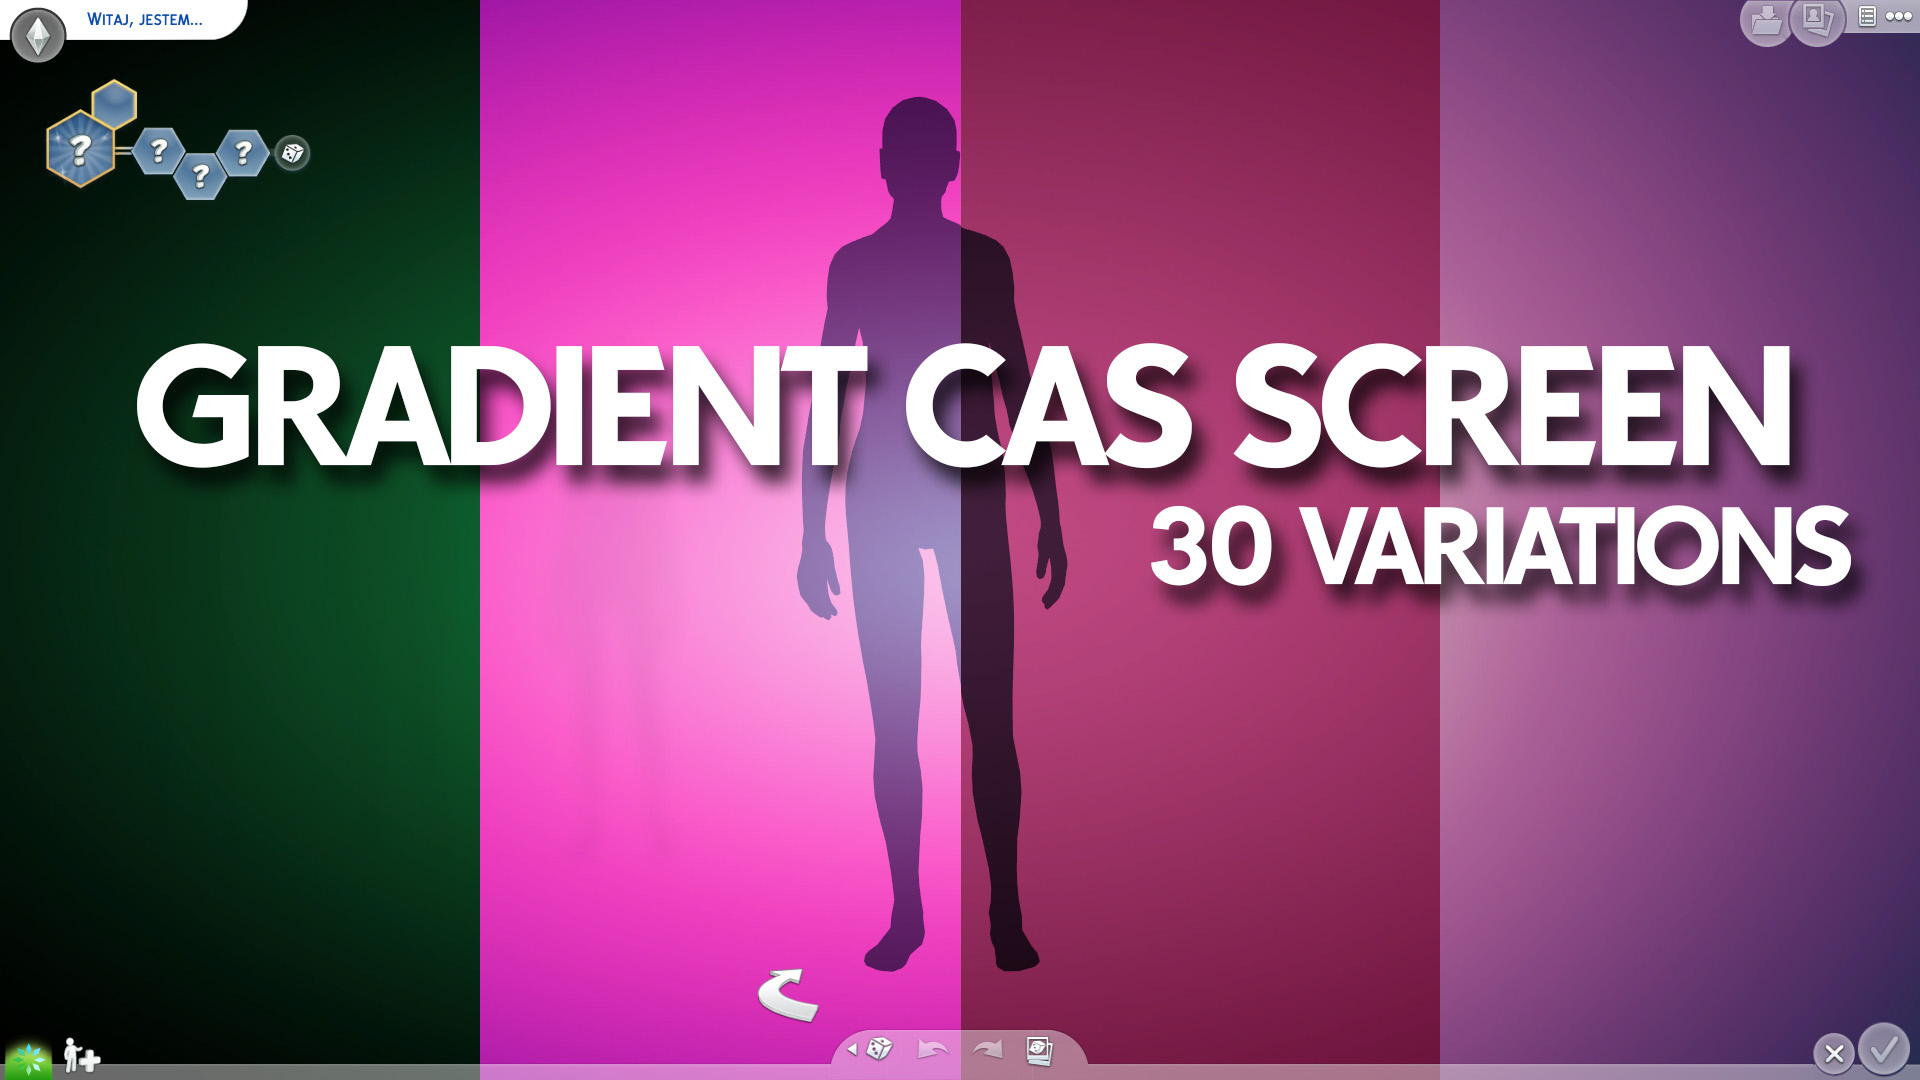 Mod The Sims - Gradient CAS Screen